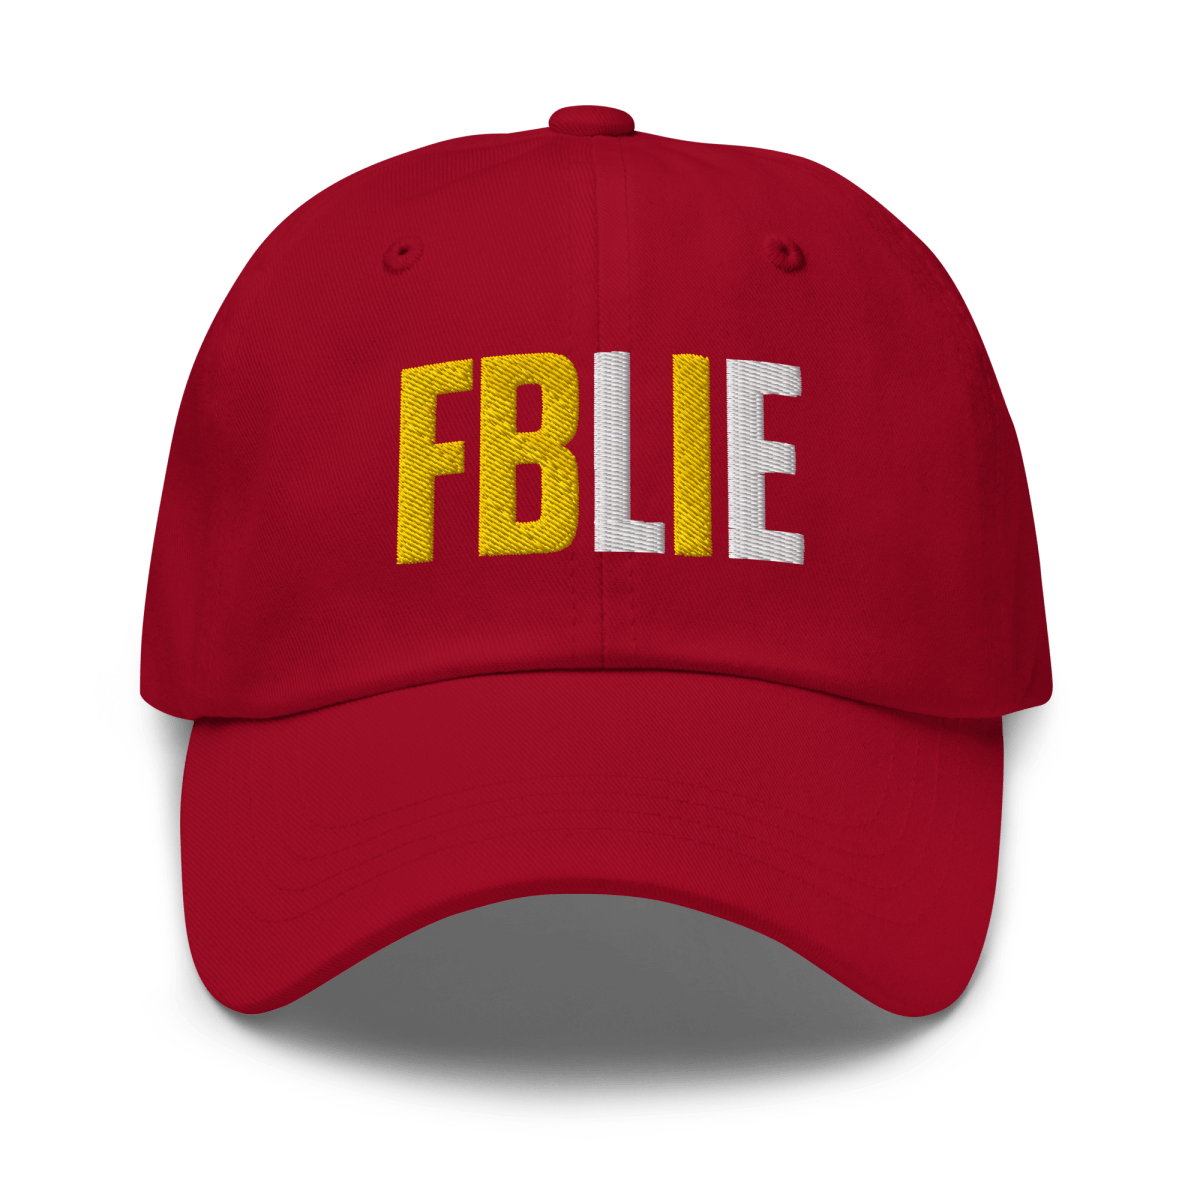 Red FBI / FBLIE Hat